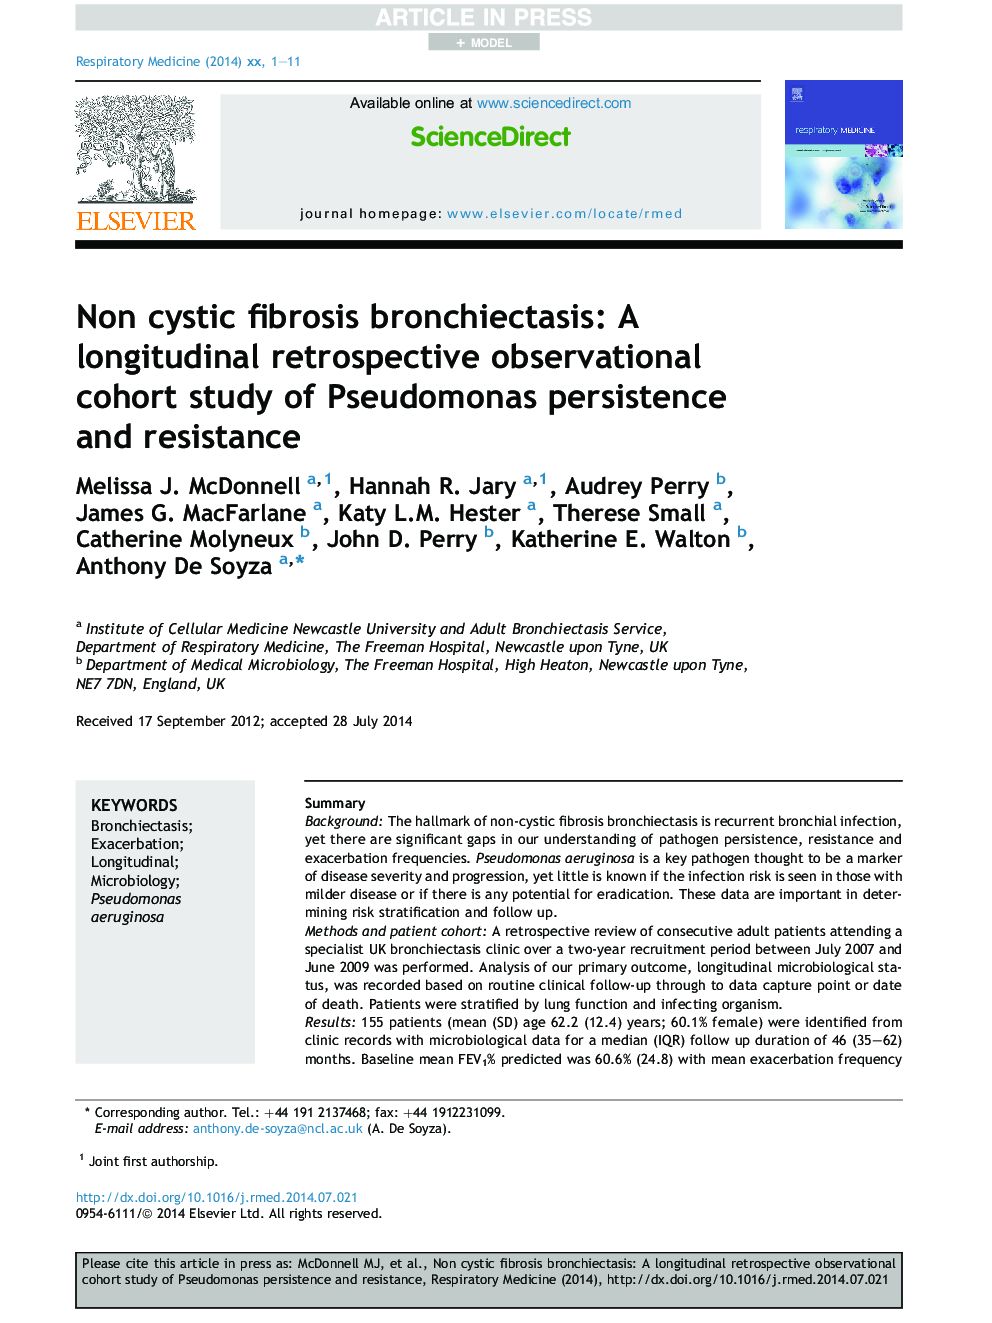 Non cystic fibrosis bronchiectasis: A longitudinal retrospective observational cohort study of Pseudomonas persistence and resistance